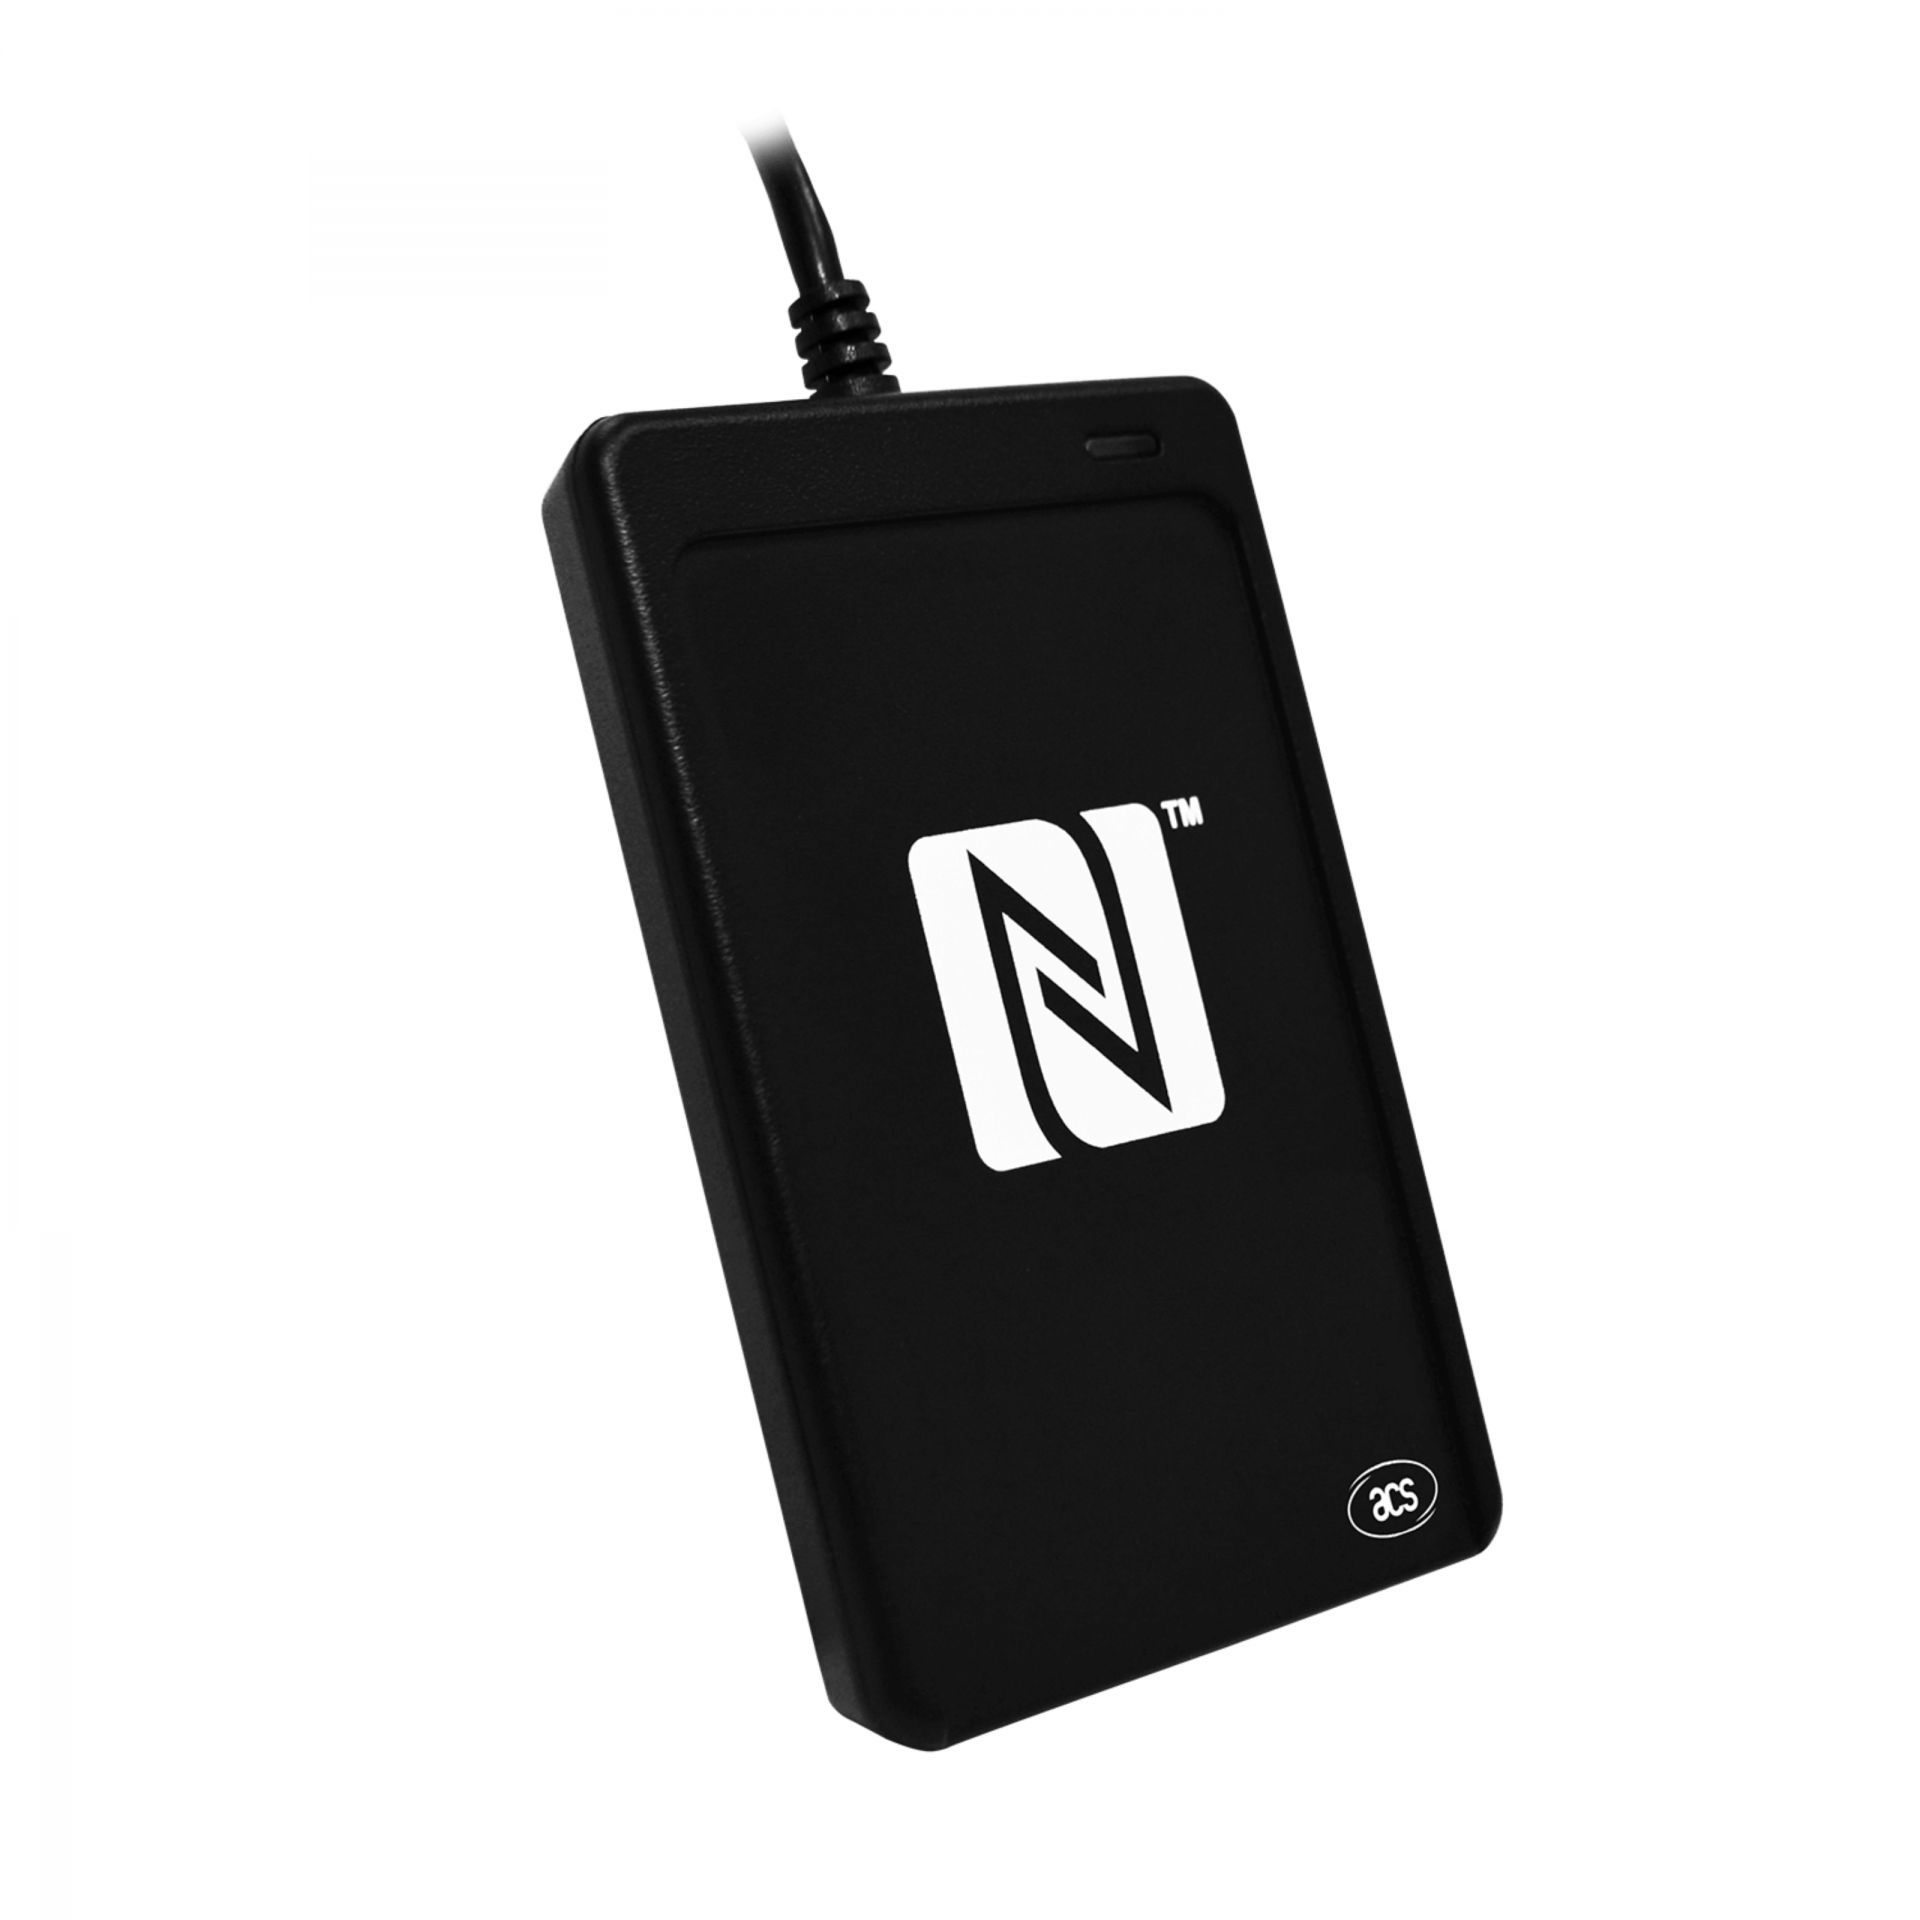 NFC reader ACR1252U